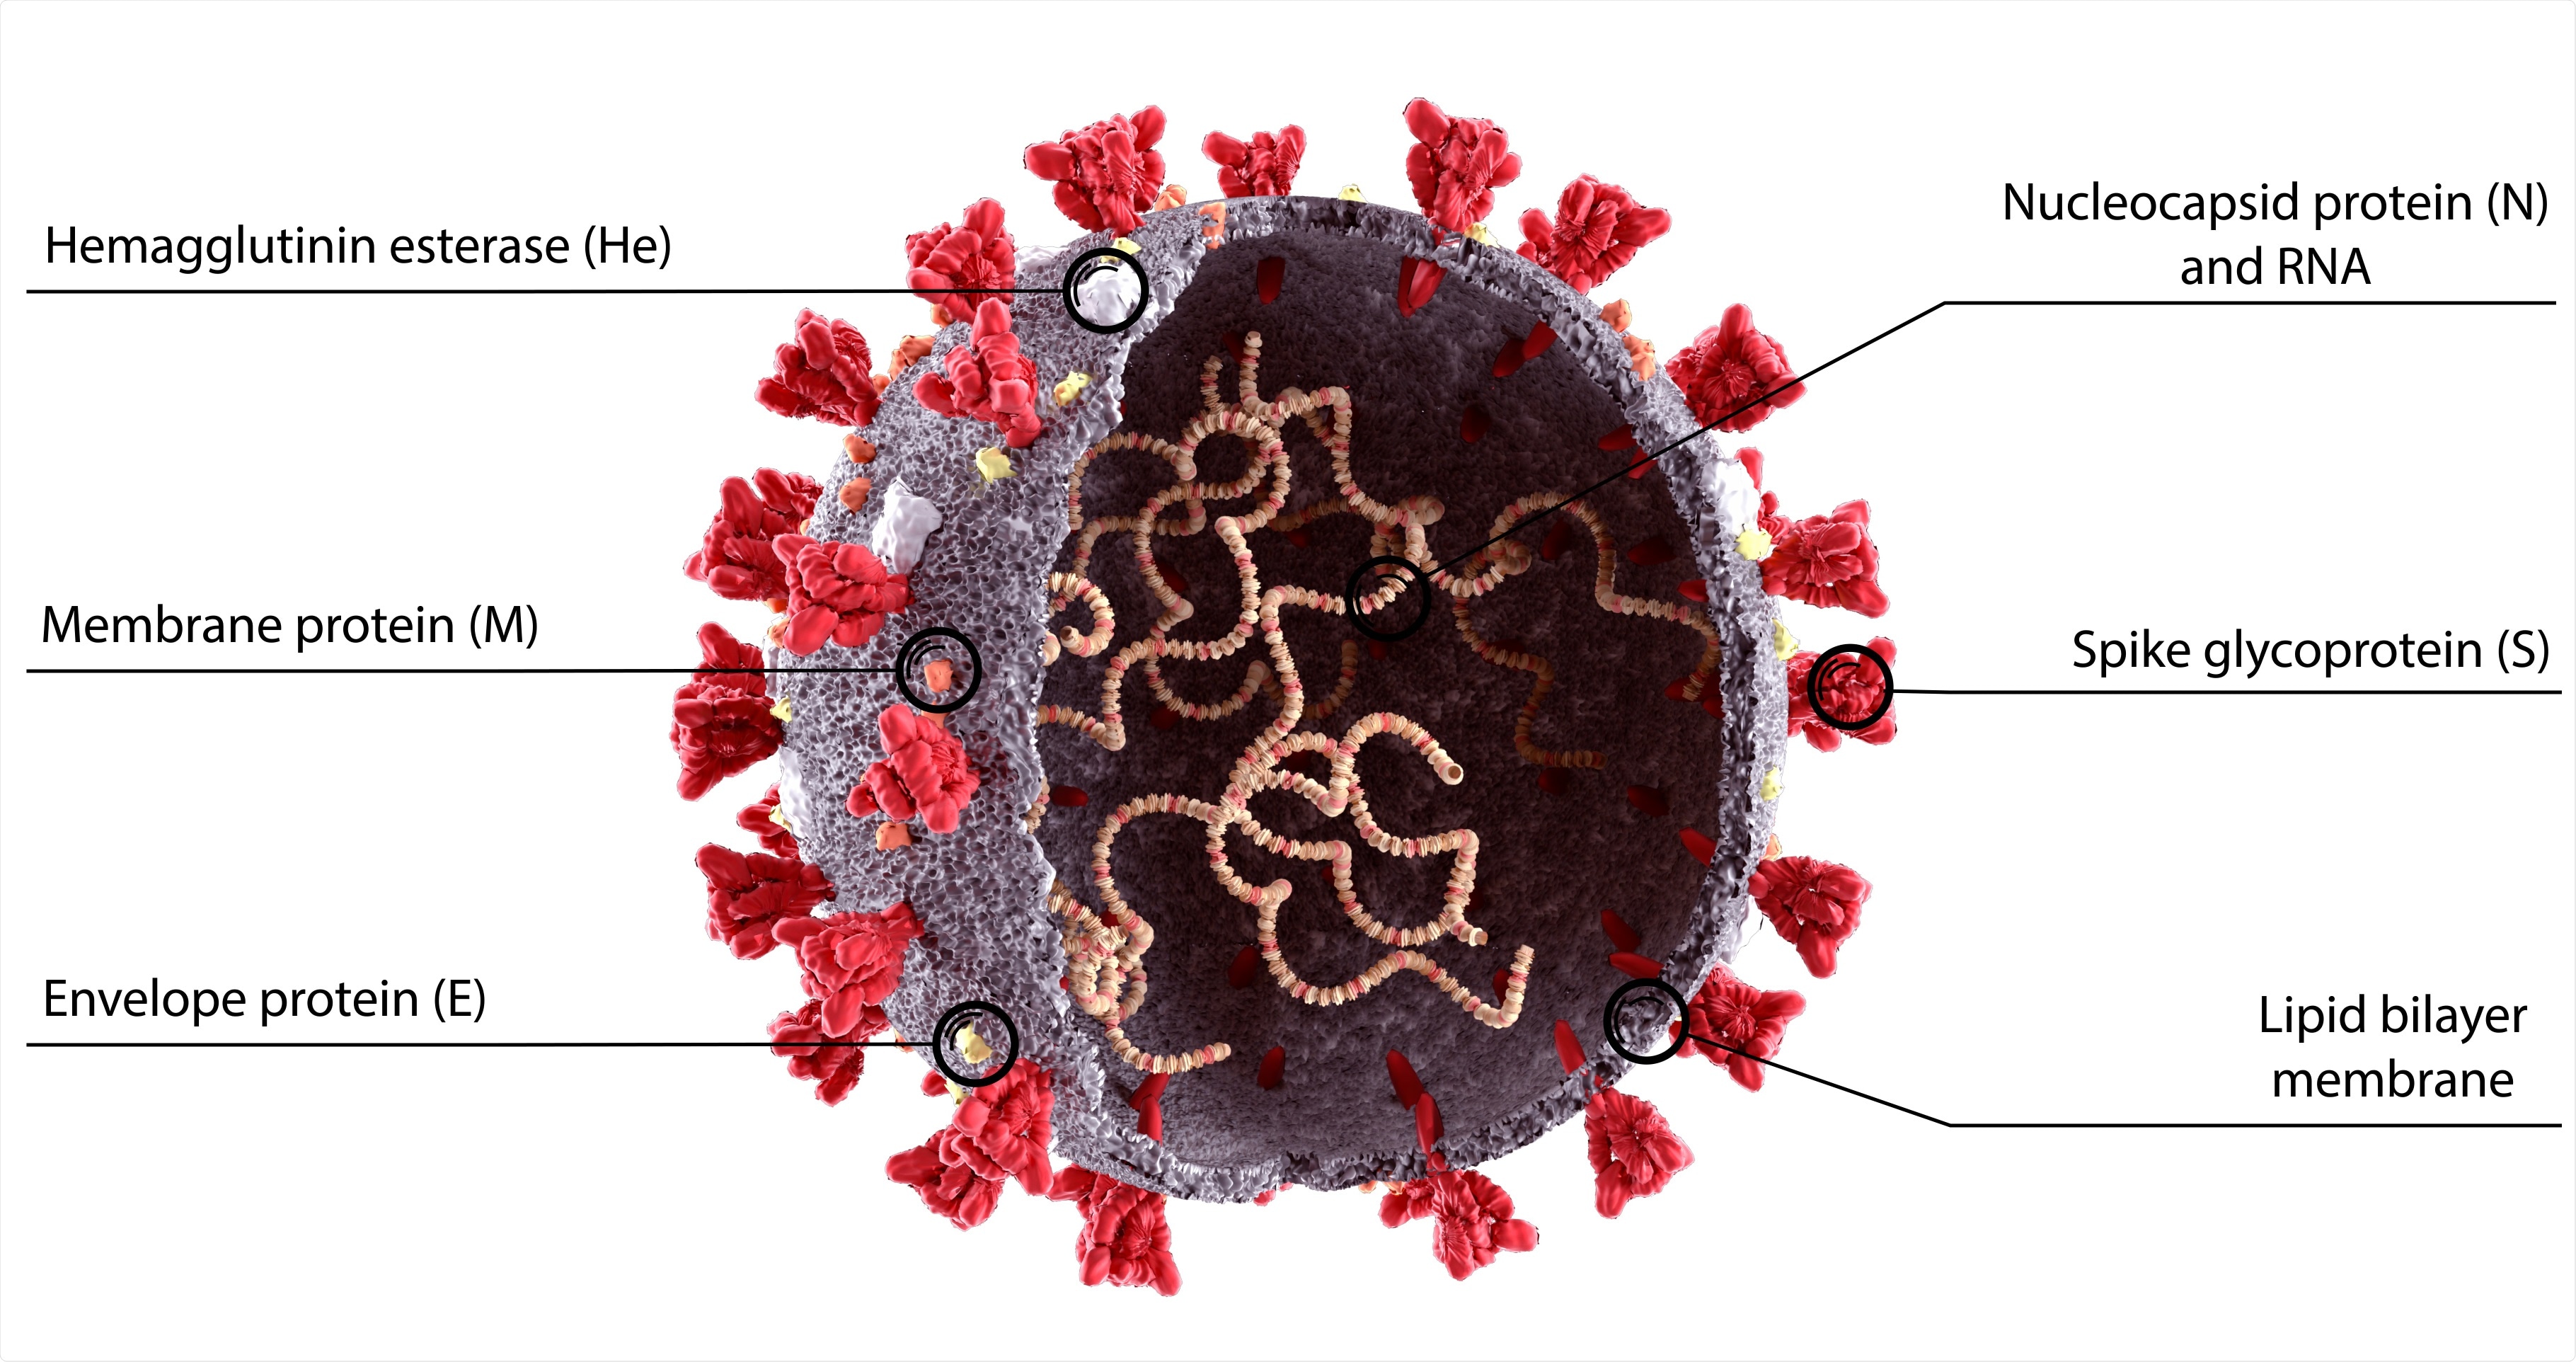 Severe acute respiratory syndrome coronavirus 2 (SARS-CoV-2) ilustration. Image Credit: Orpheus FX / Shutterstock